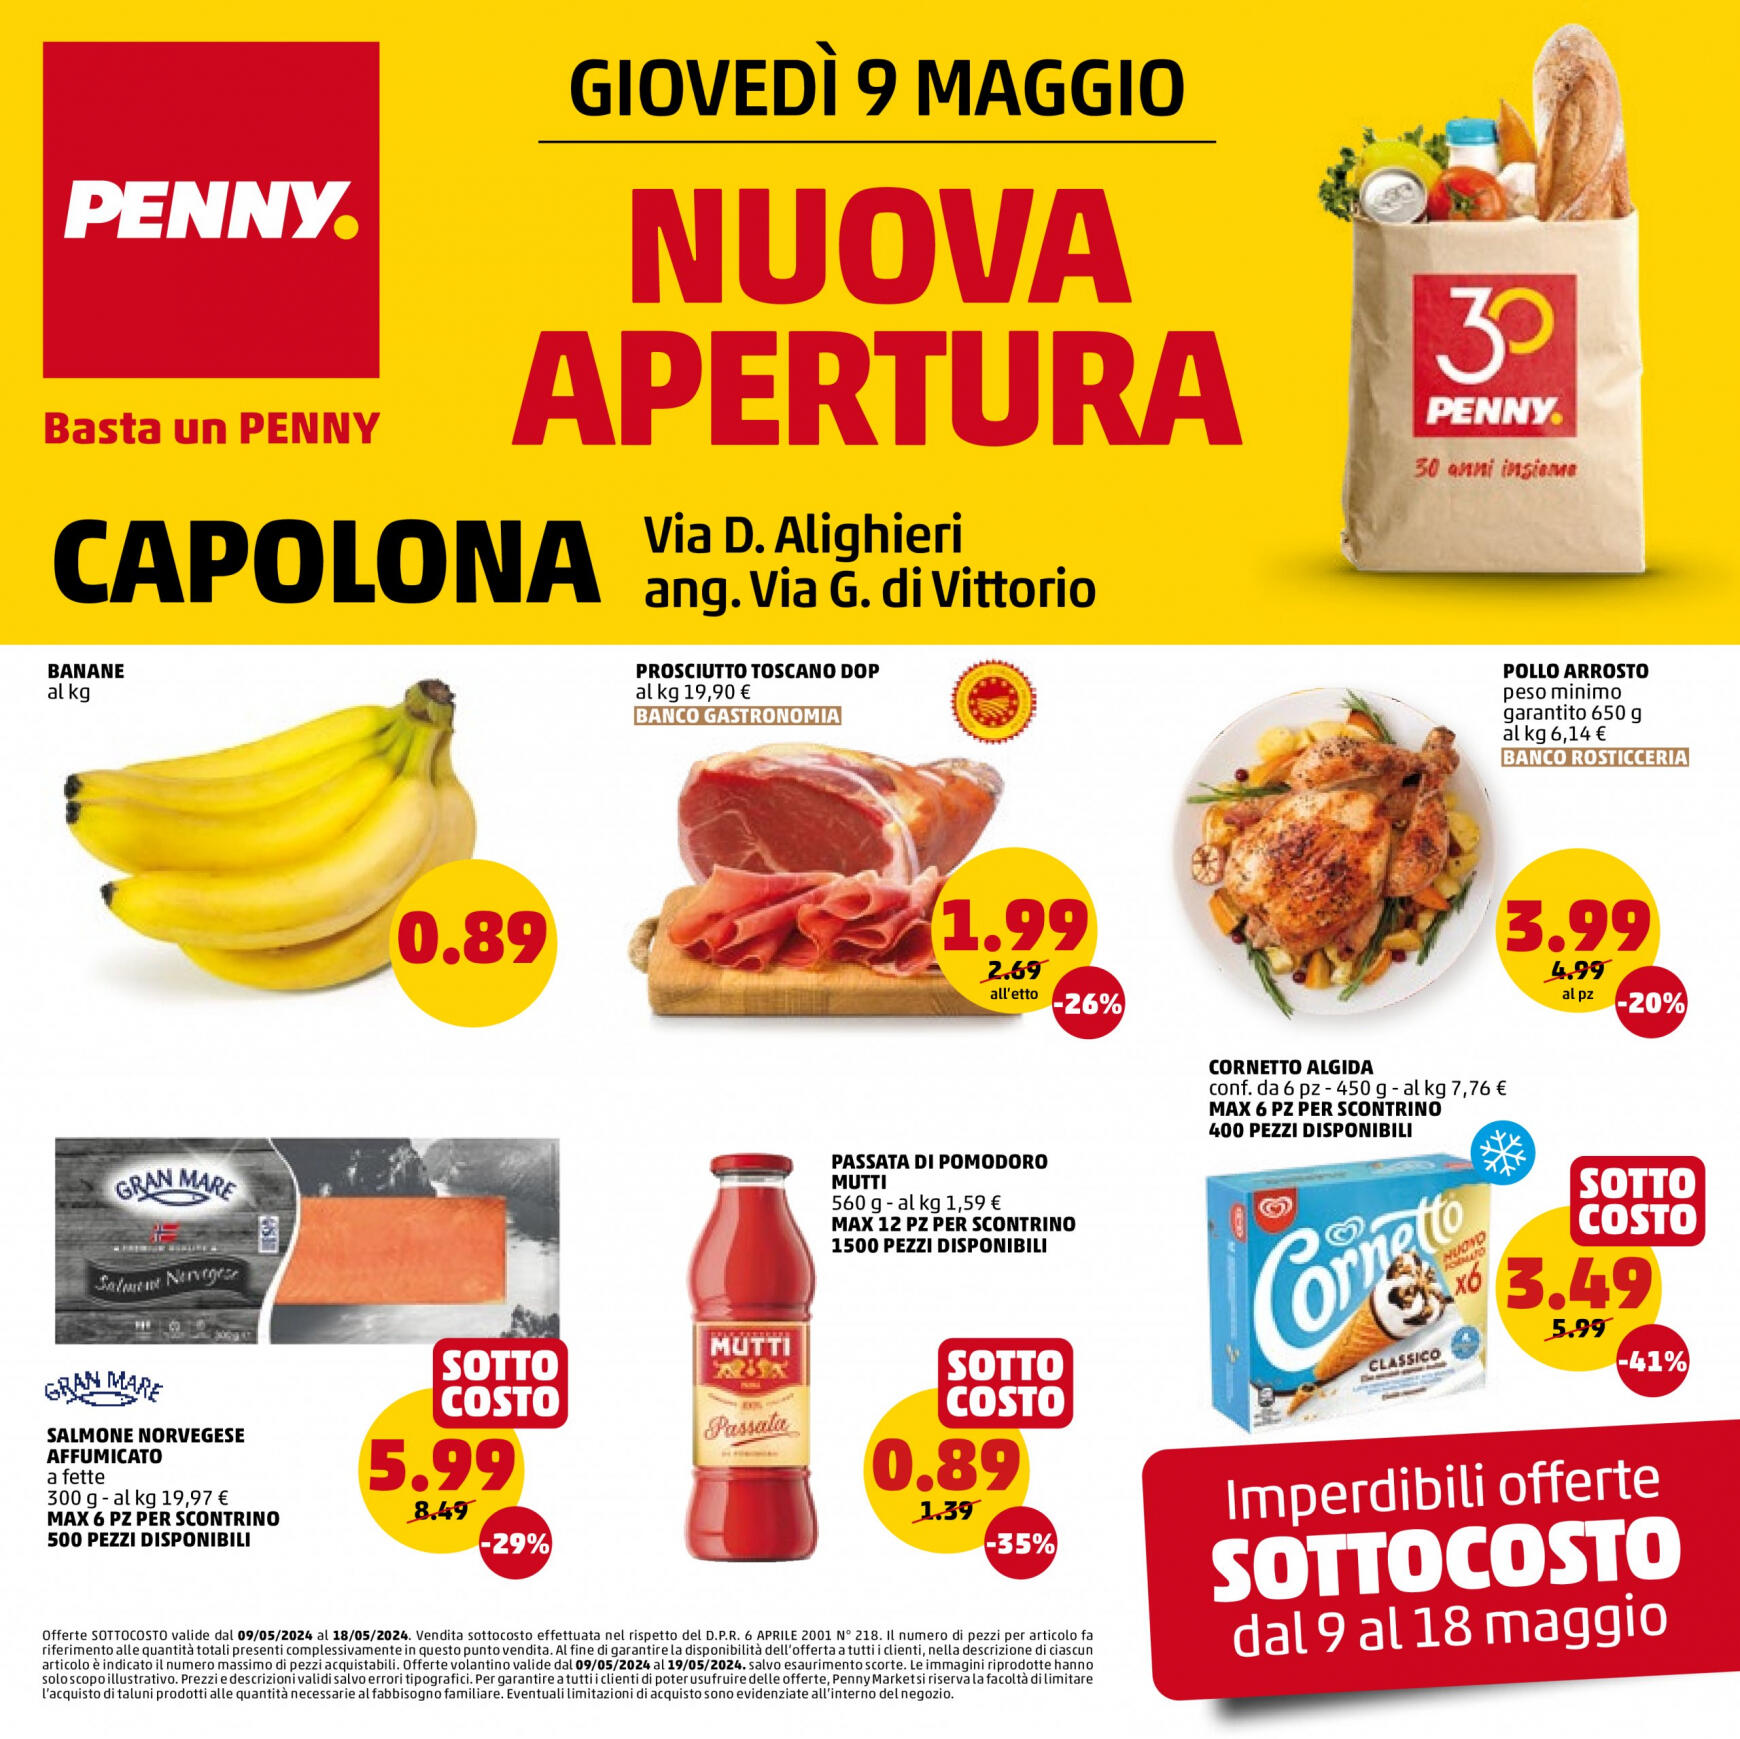 penny - Nuovo volantino PENNY - Nuova apertura 09.05. - 18.05. - page: 1